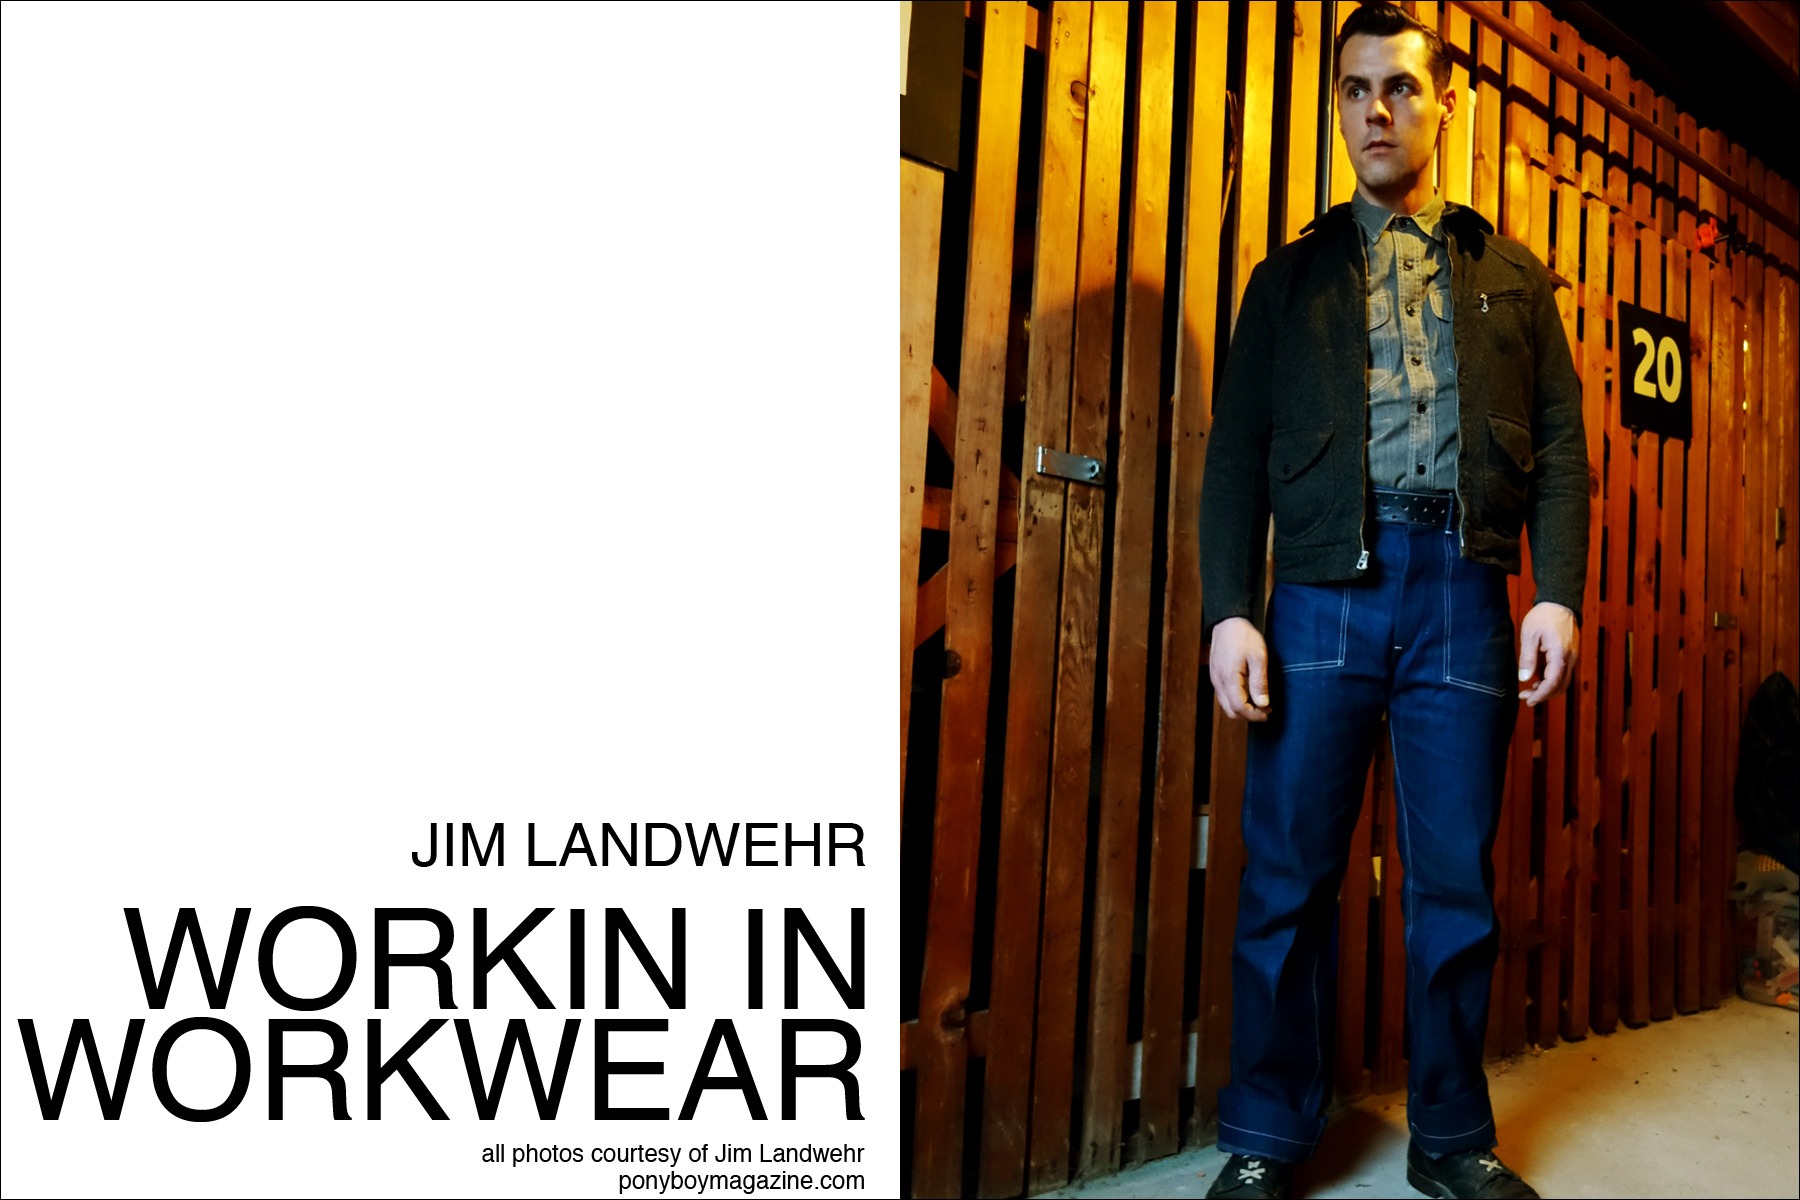 Ponyboy Magazine profile on Jim Landwehr, from Instagram profile "workin_in_workwear".